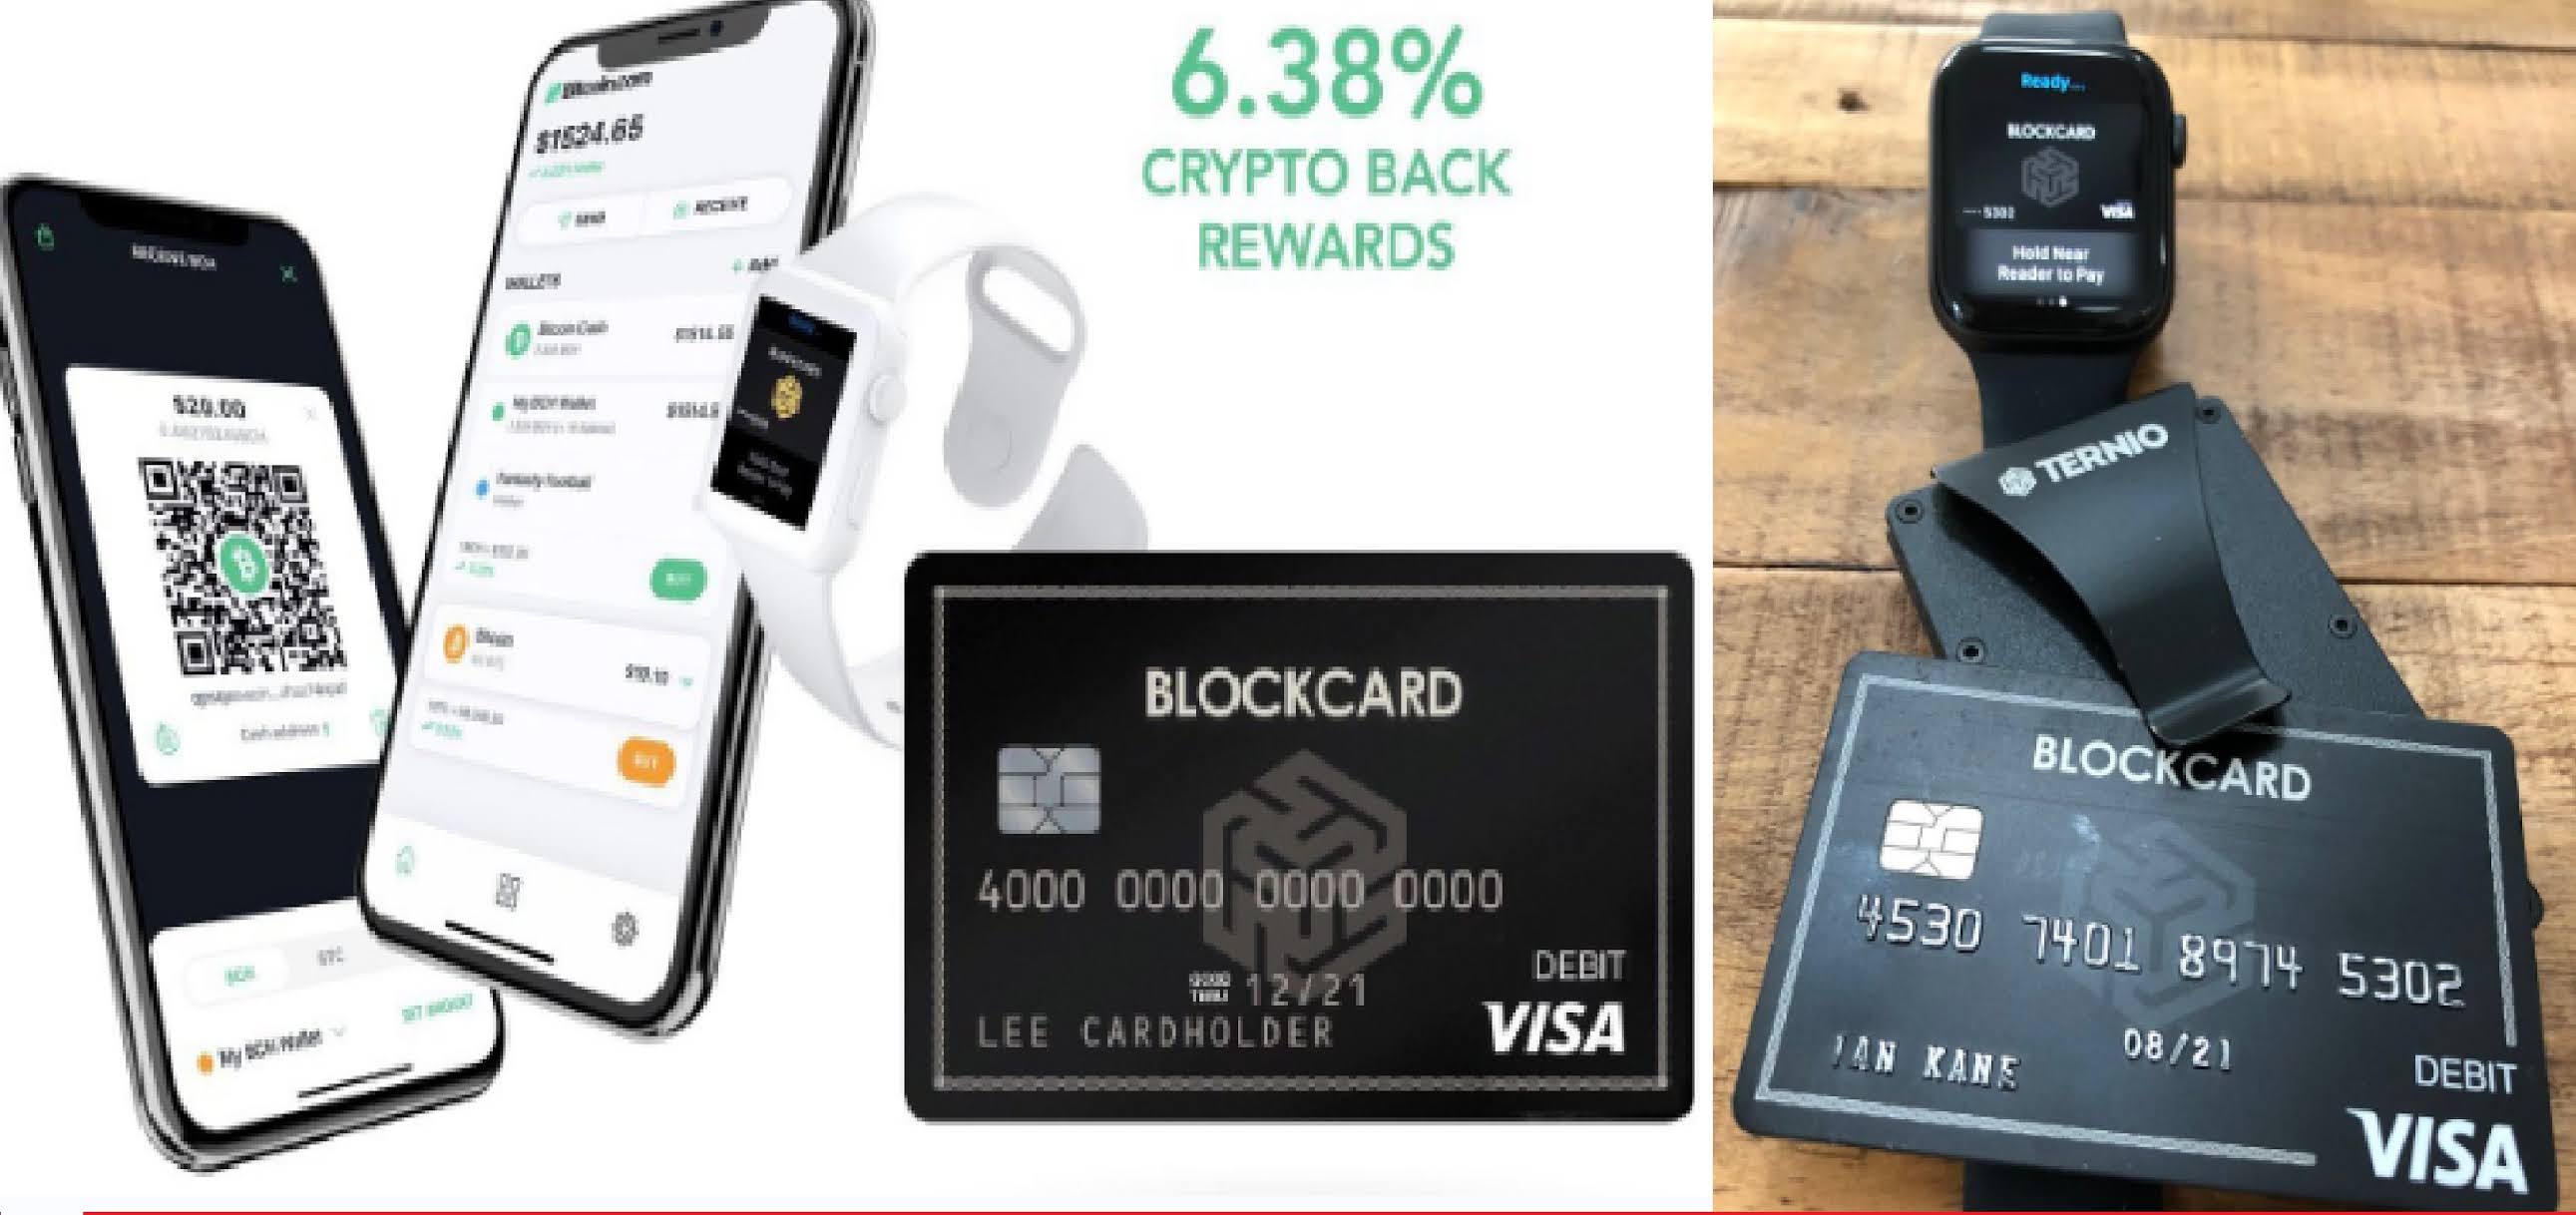 The Best Crypto Debit Card - BlockCard - Ternio’s BlockCard Teams With